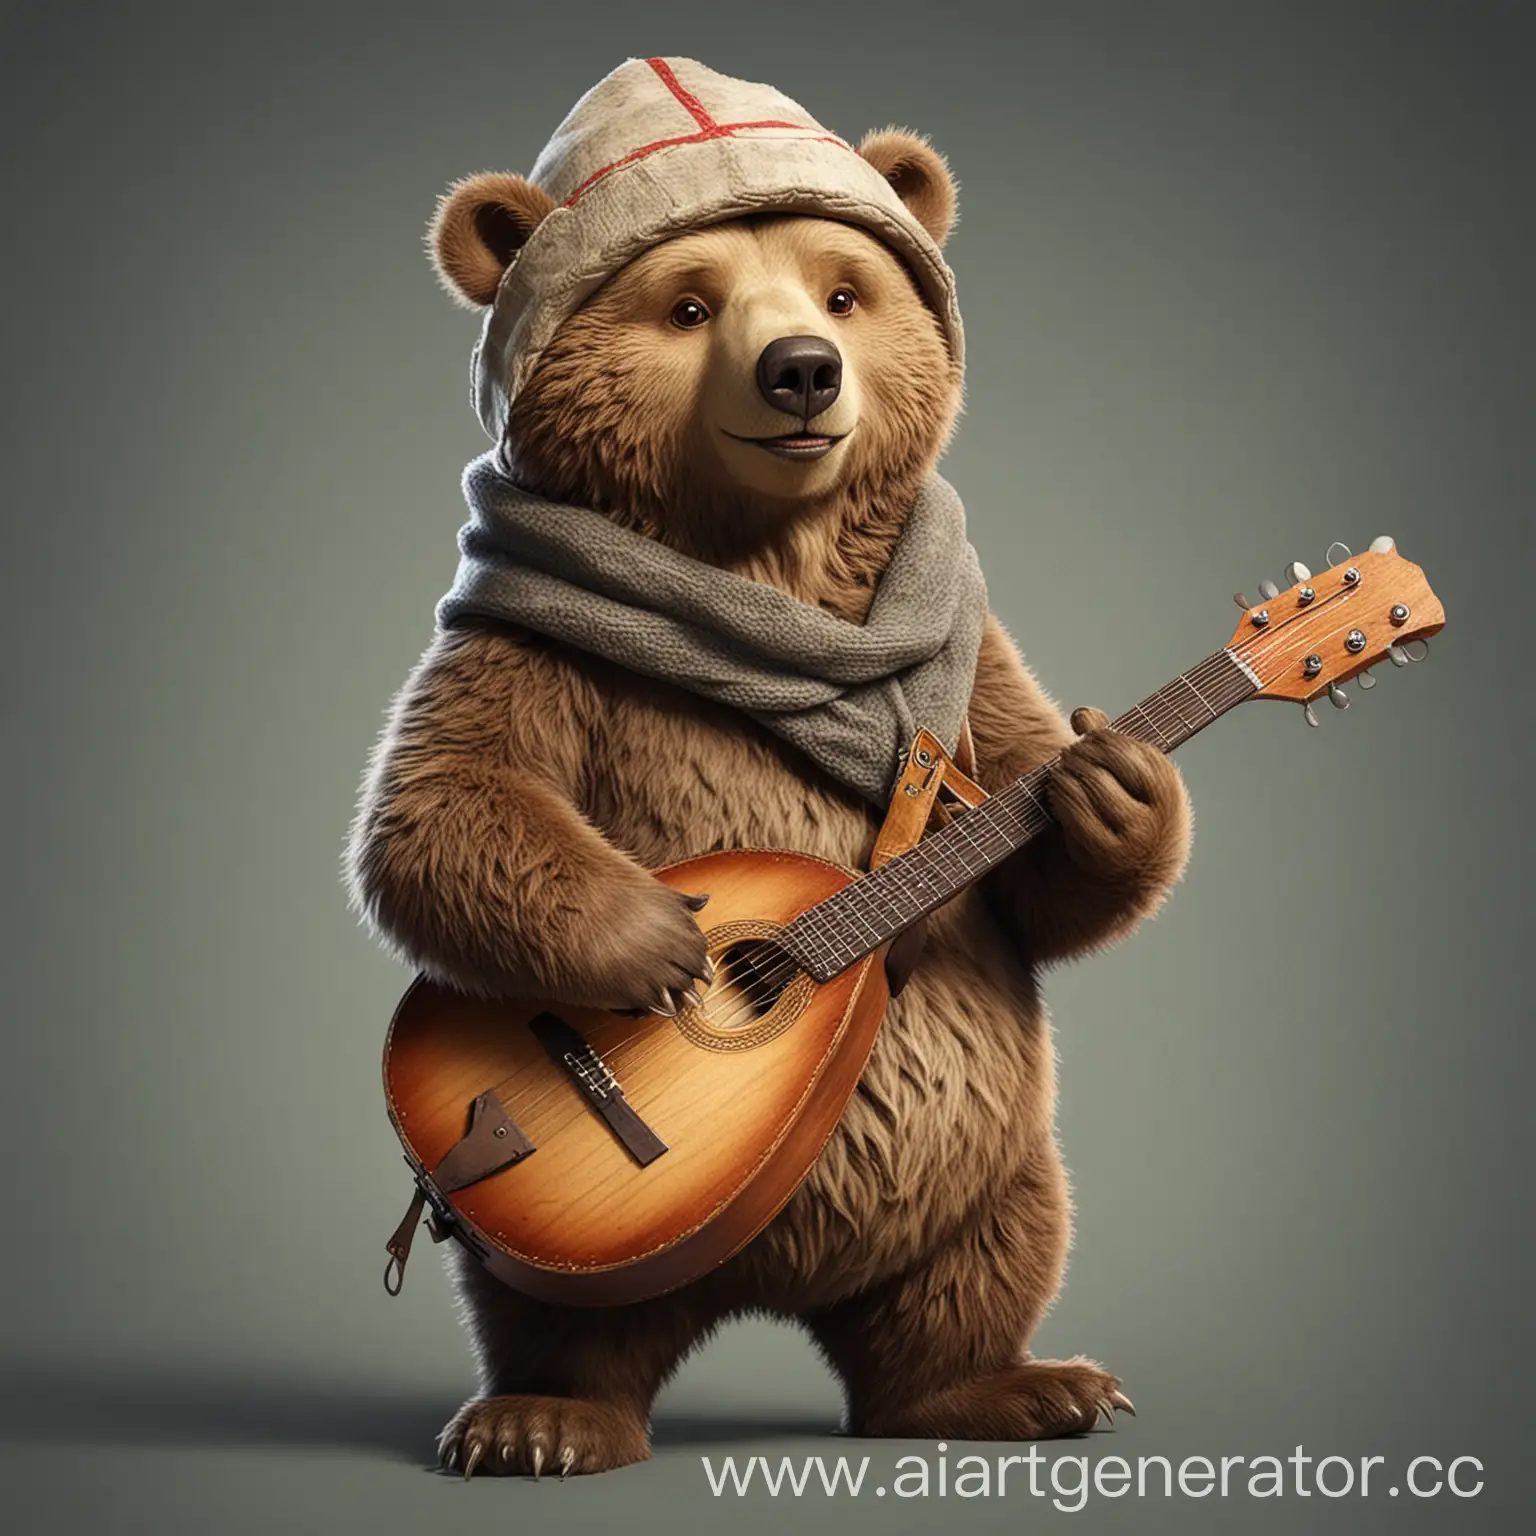 Cartoon-Bear-with-Ushanka-Hat-and-Balalaika-Whimsical-Russian-Folk-Bear-Illustration